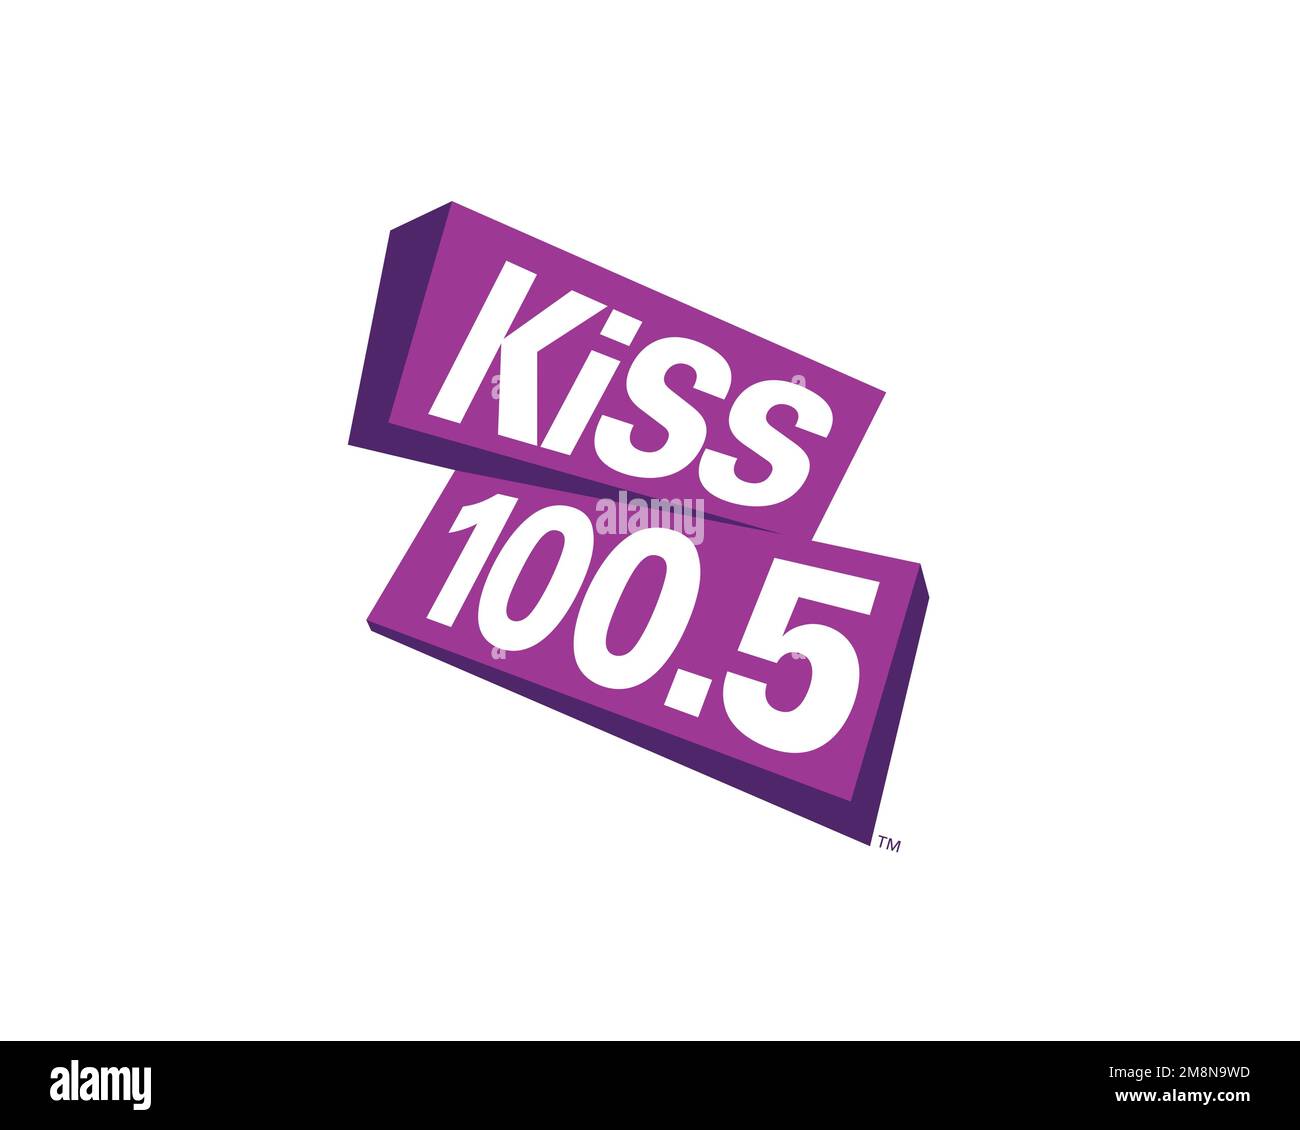 CHUR FM, rotated logo, white background B Stock Photo